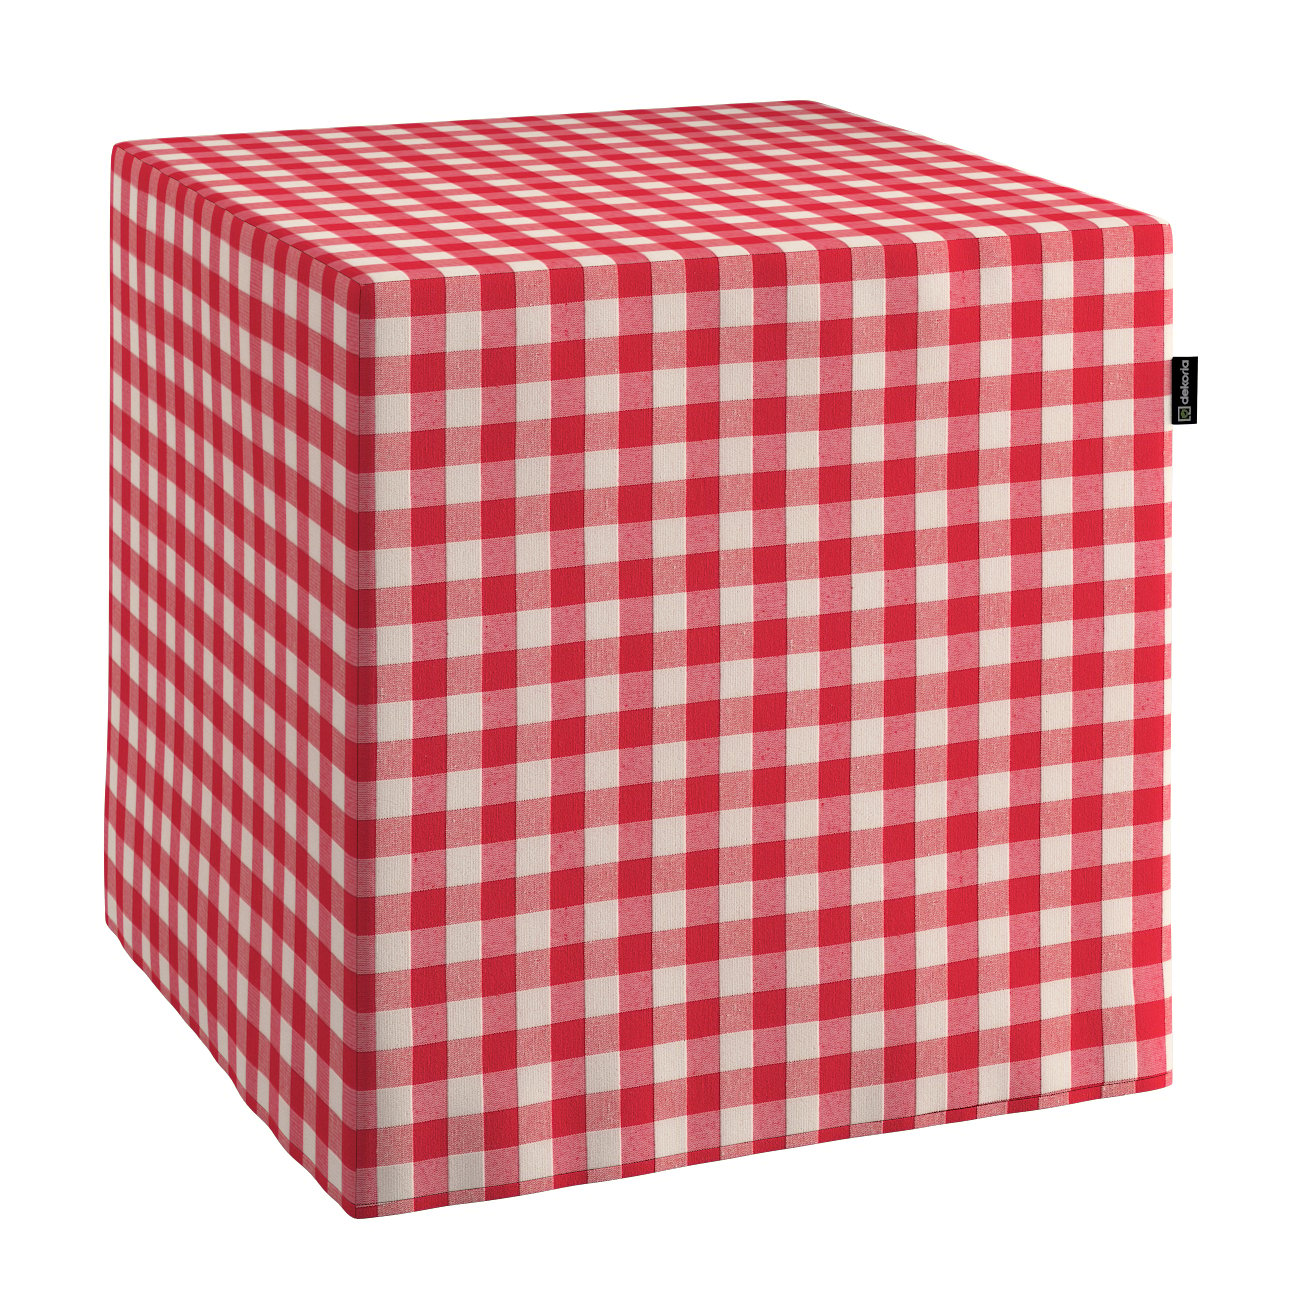 Dekoria Poťah na taburetku,kocka, červeno-biele káro, 40 x 40 x 40 cm, Quadro, 136-16